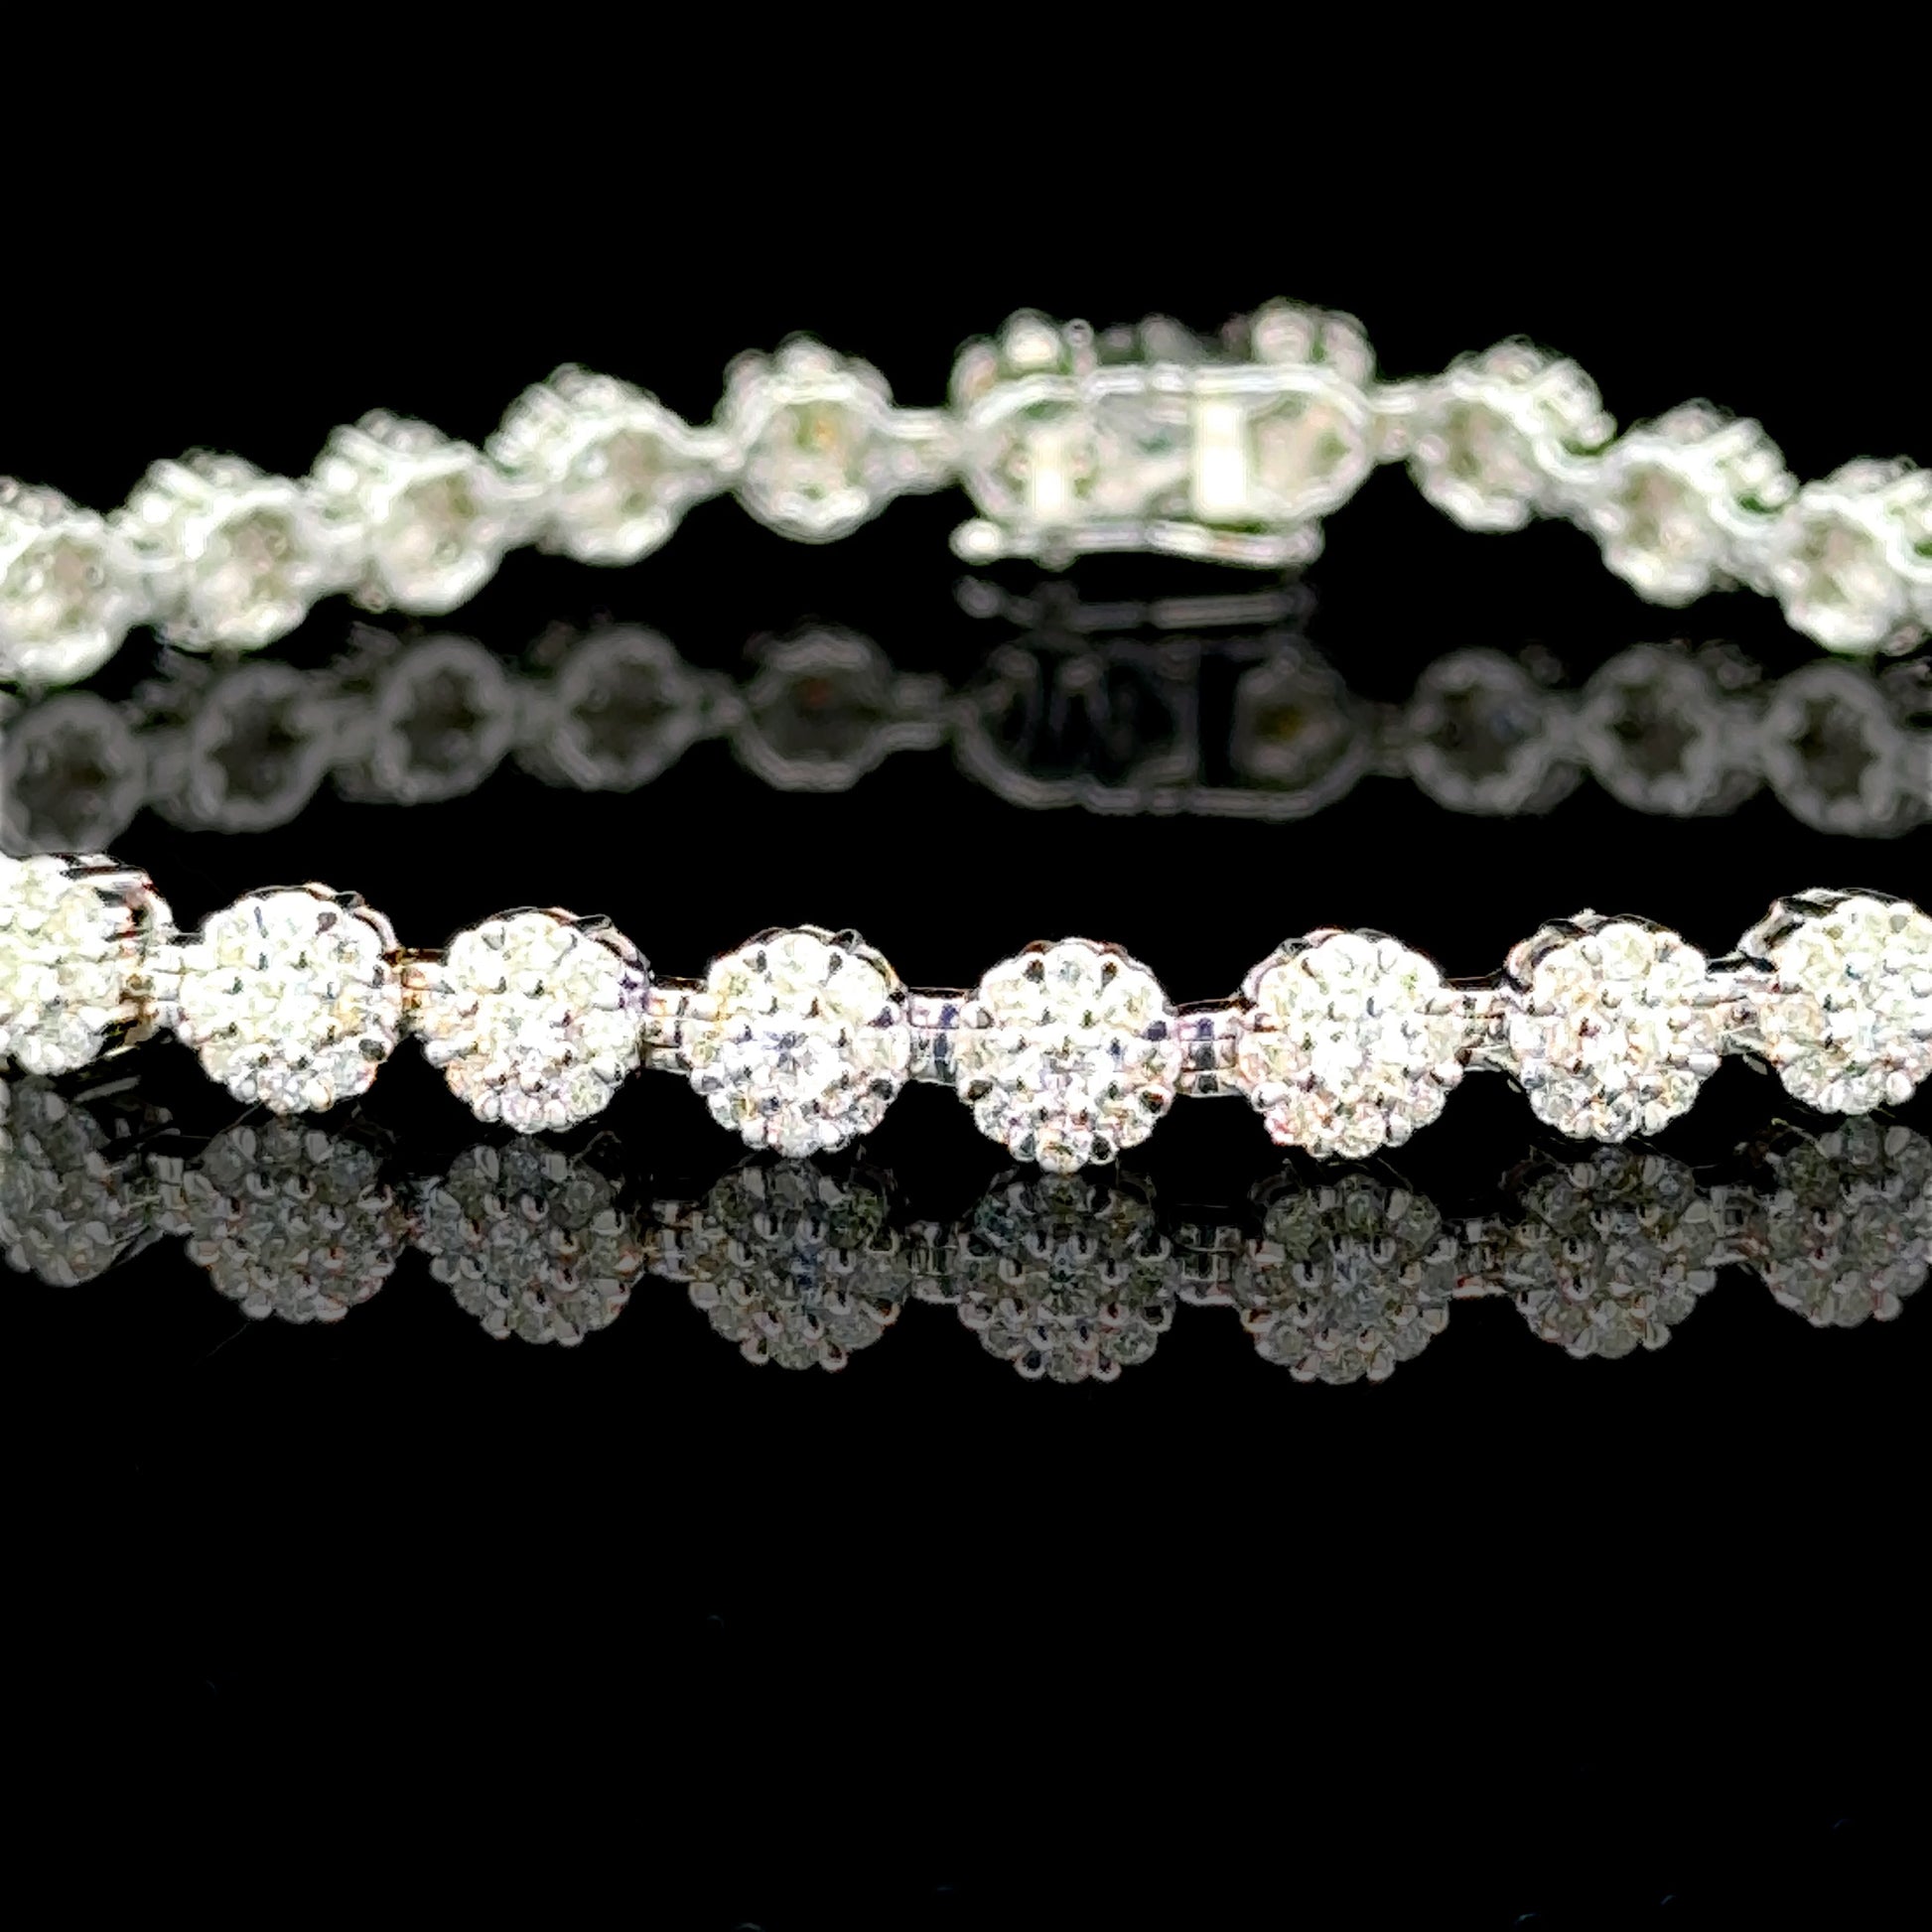 White gold diamond flower bracelet with 2 7/8 carats of diamonds